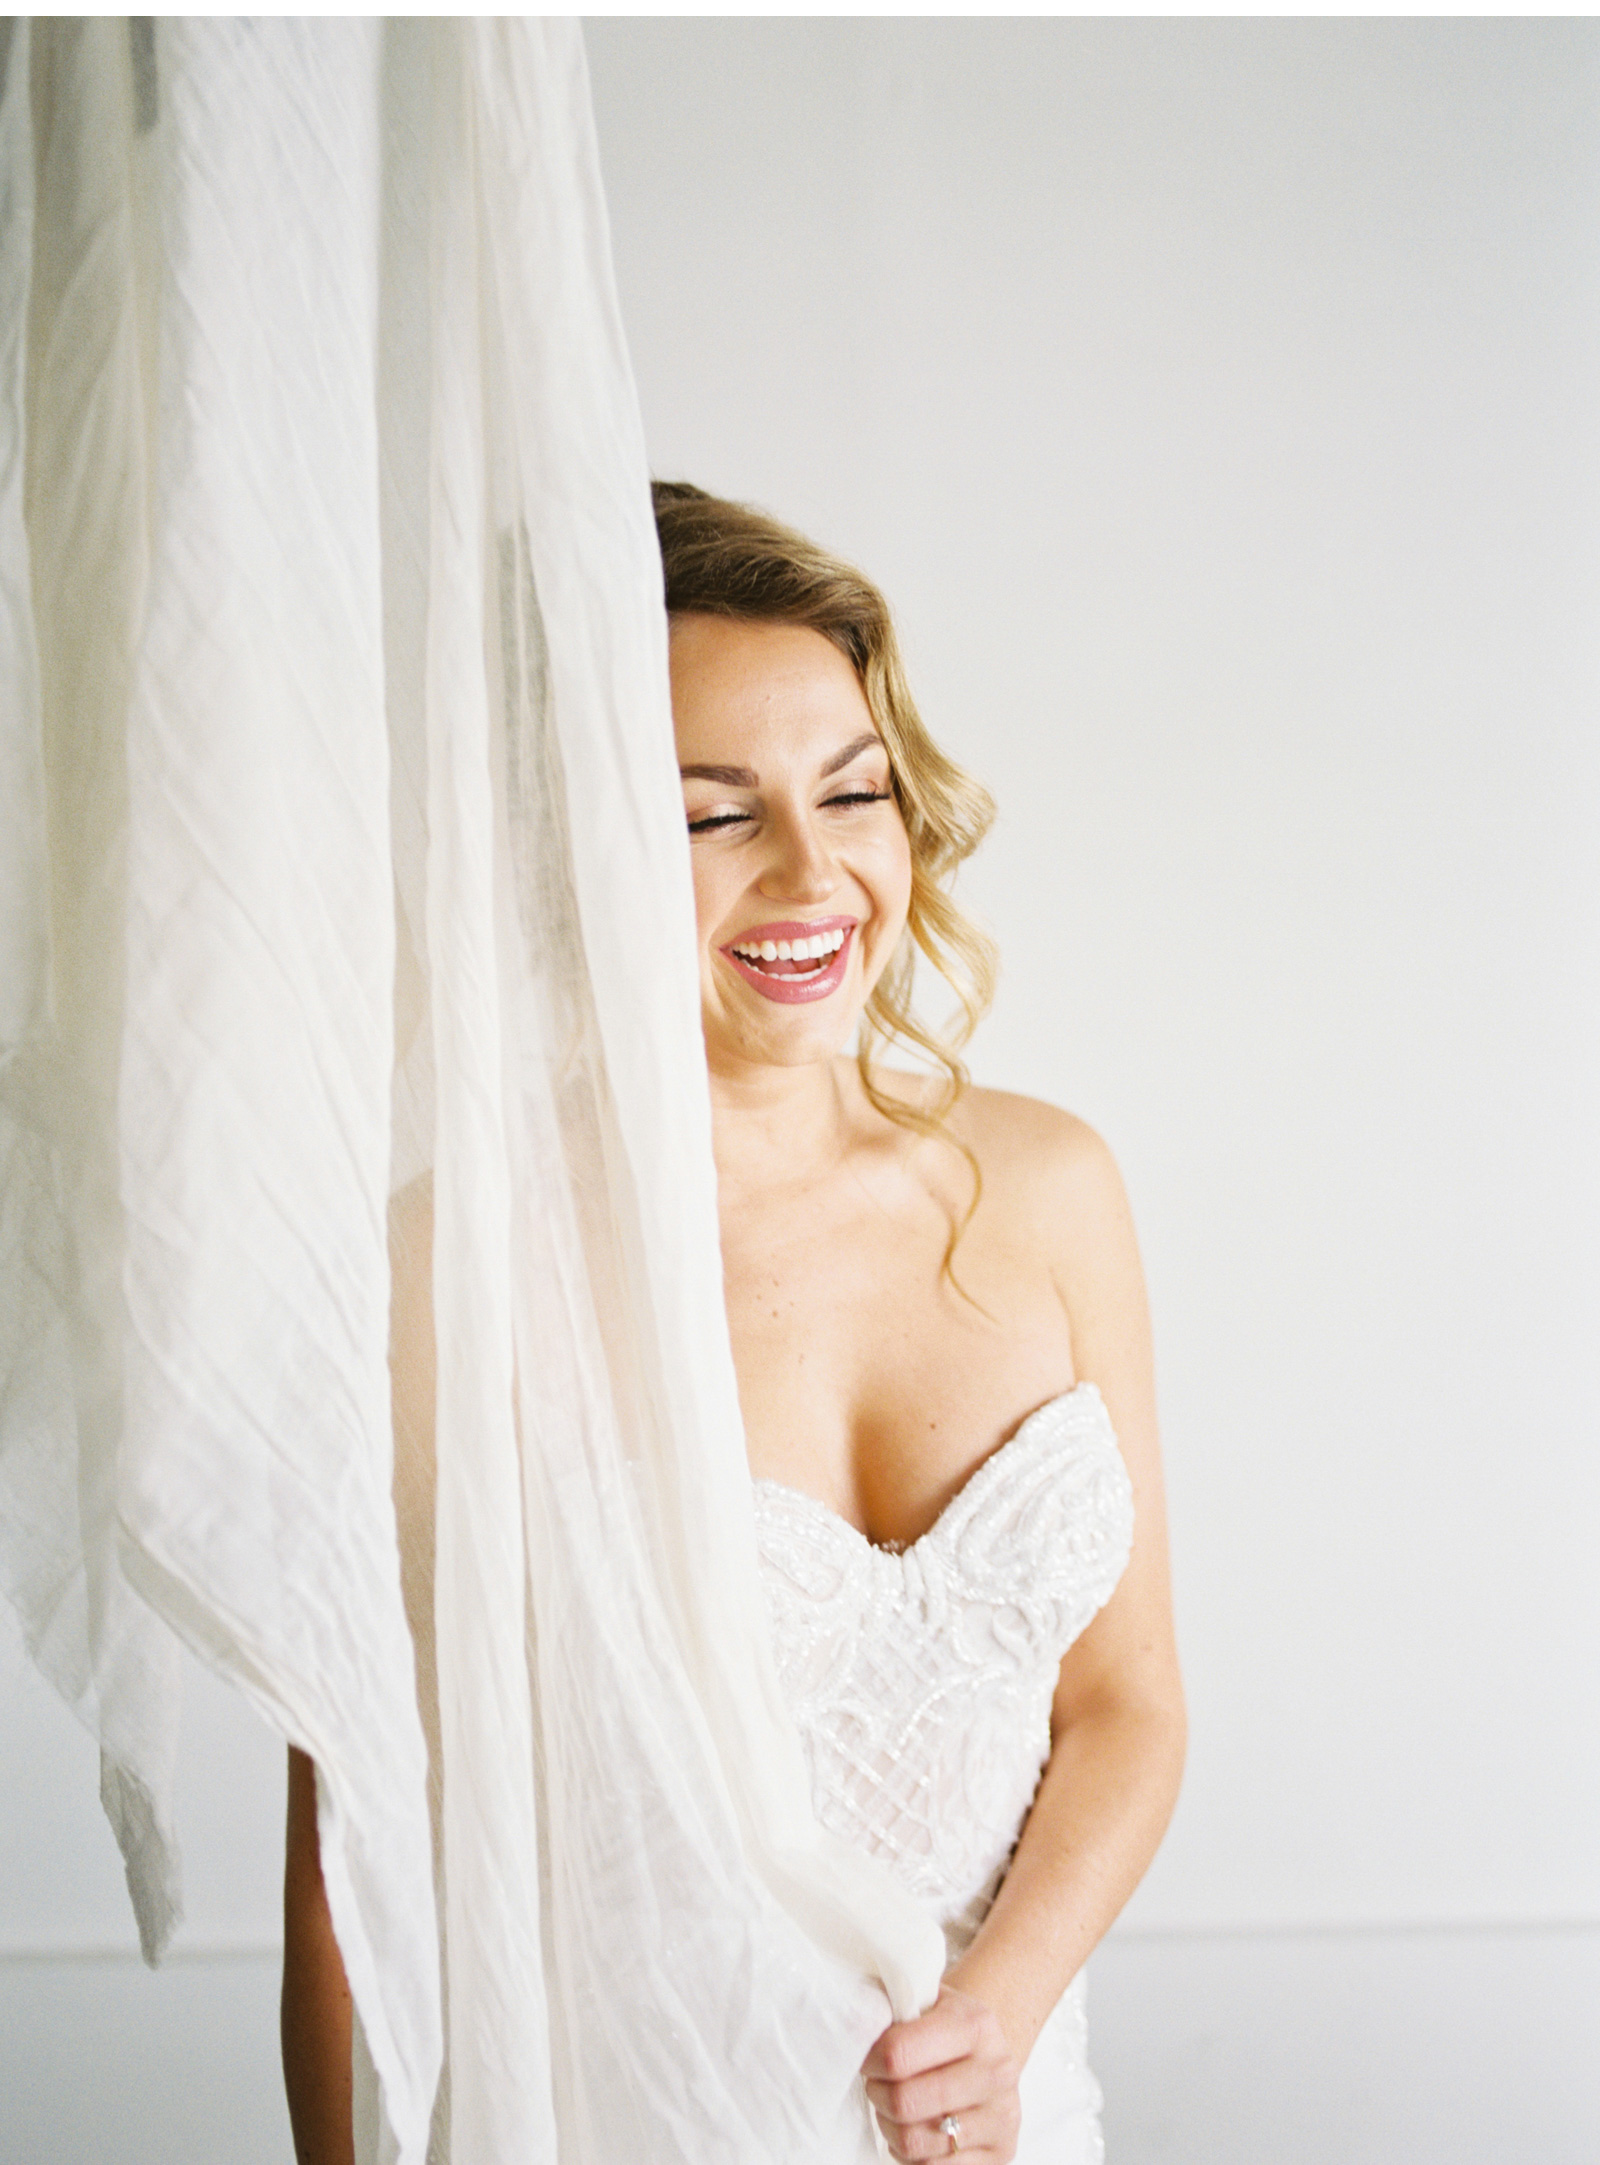 Malibu-Wedding-Photographer-Natalie-Schutt-Photography-Style-Me-Pretty-Dear-Gray-In-Studio_04.jpg